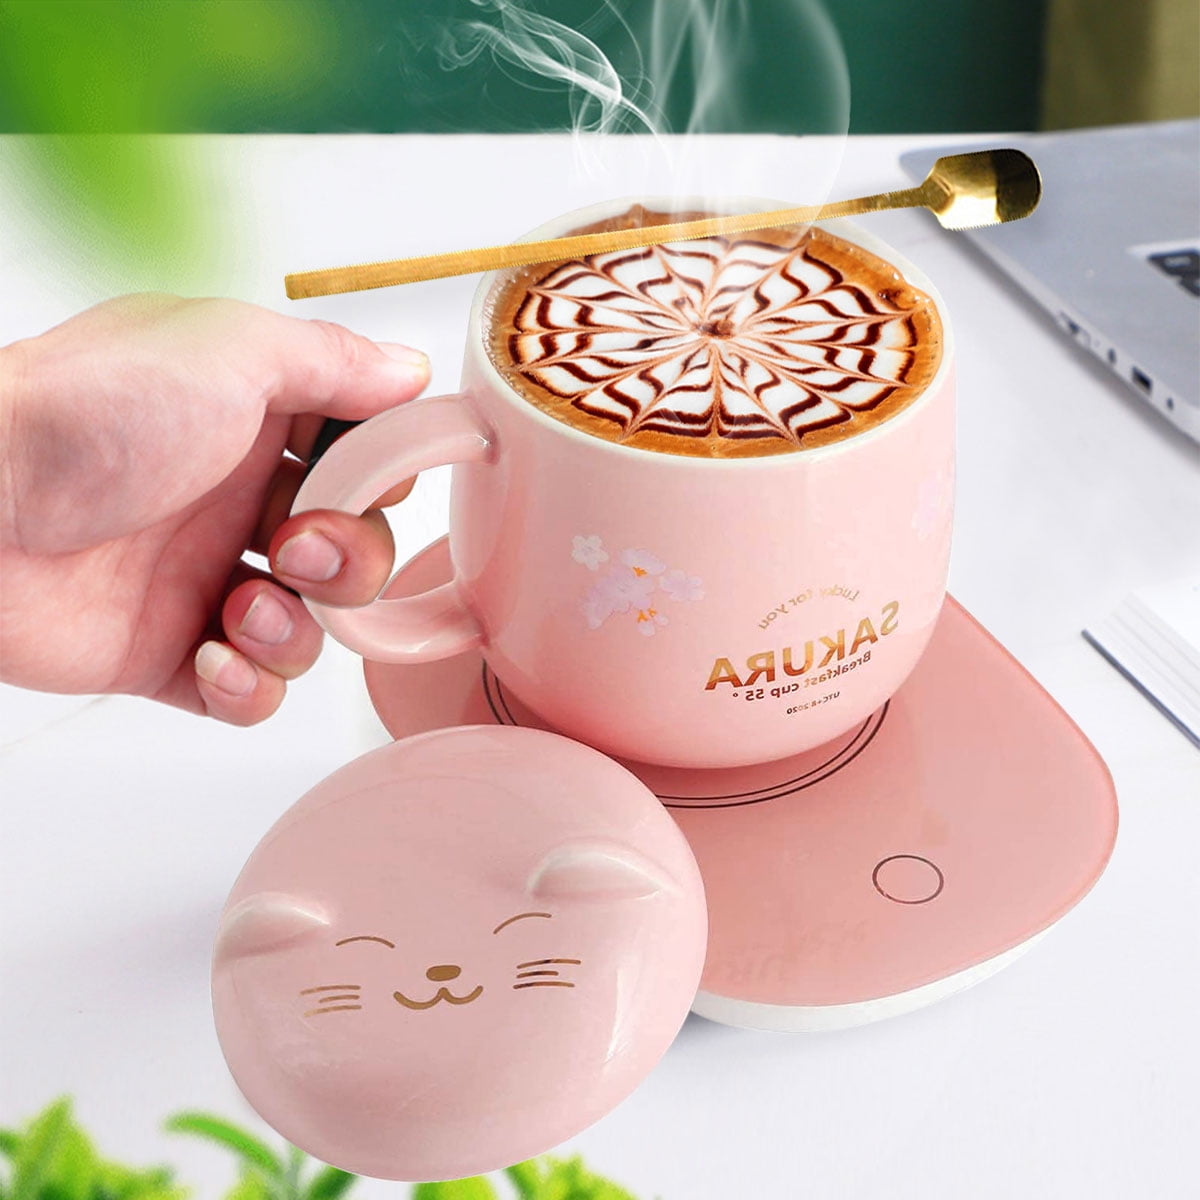 Pink Coffee Mug Warmer, Smart Coffee Cup Warmer for Desk Auto Shut